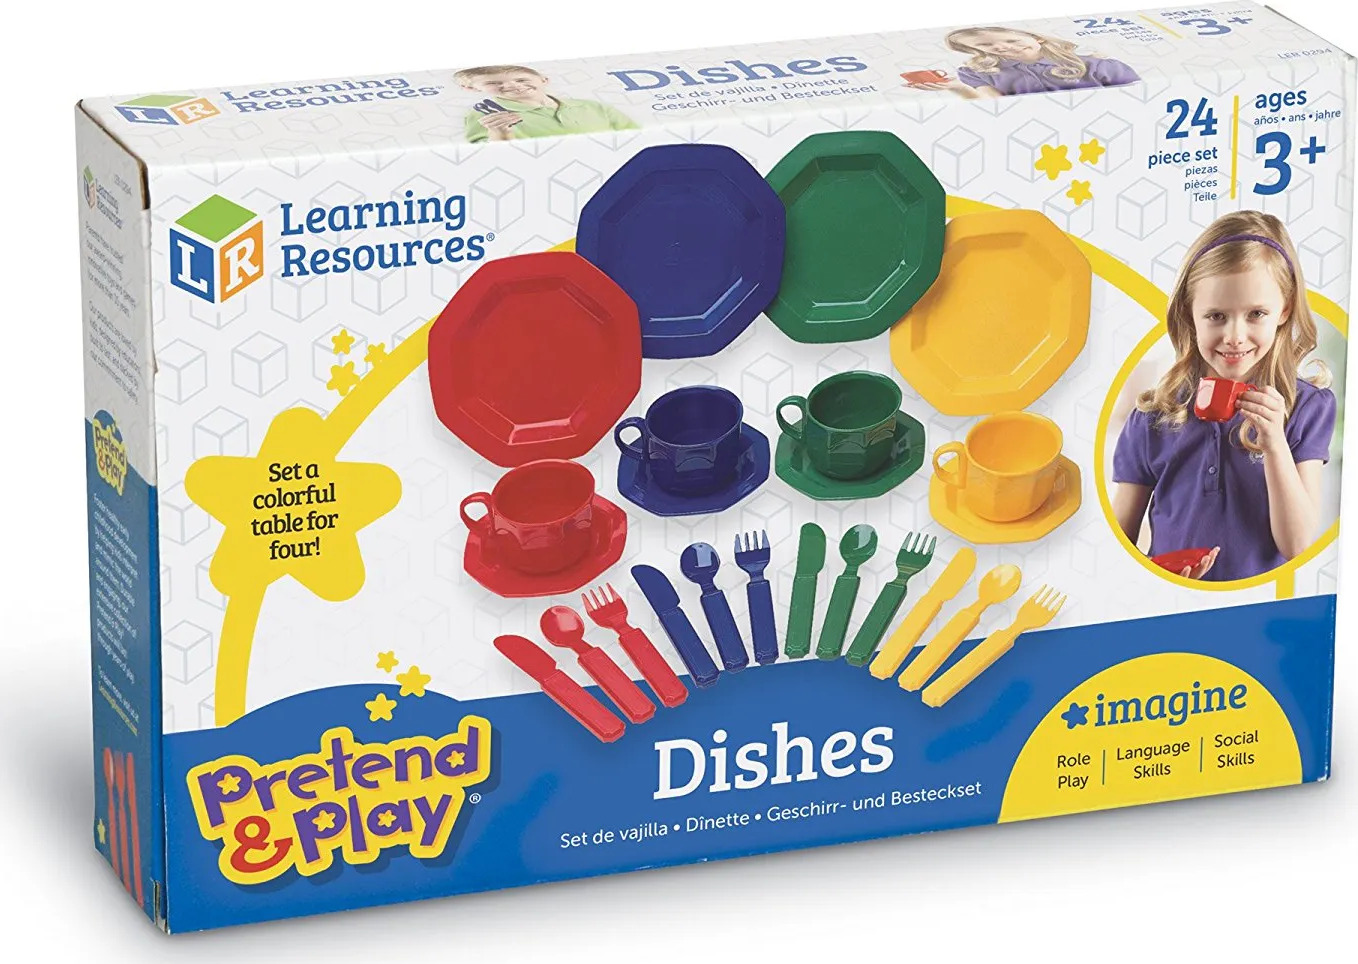 Pretend & Play Dish Set 